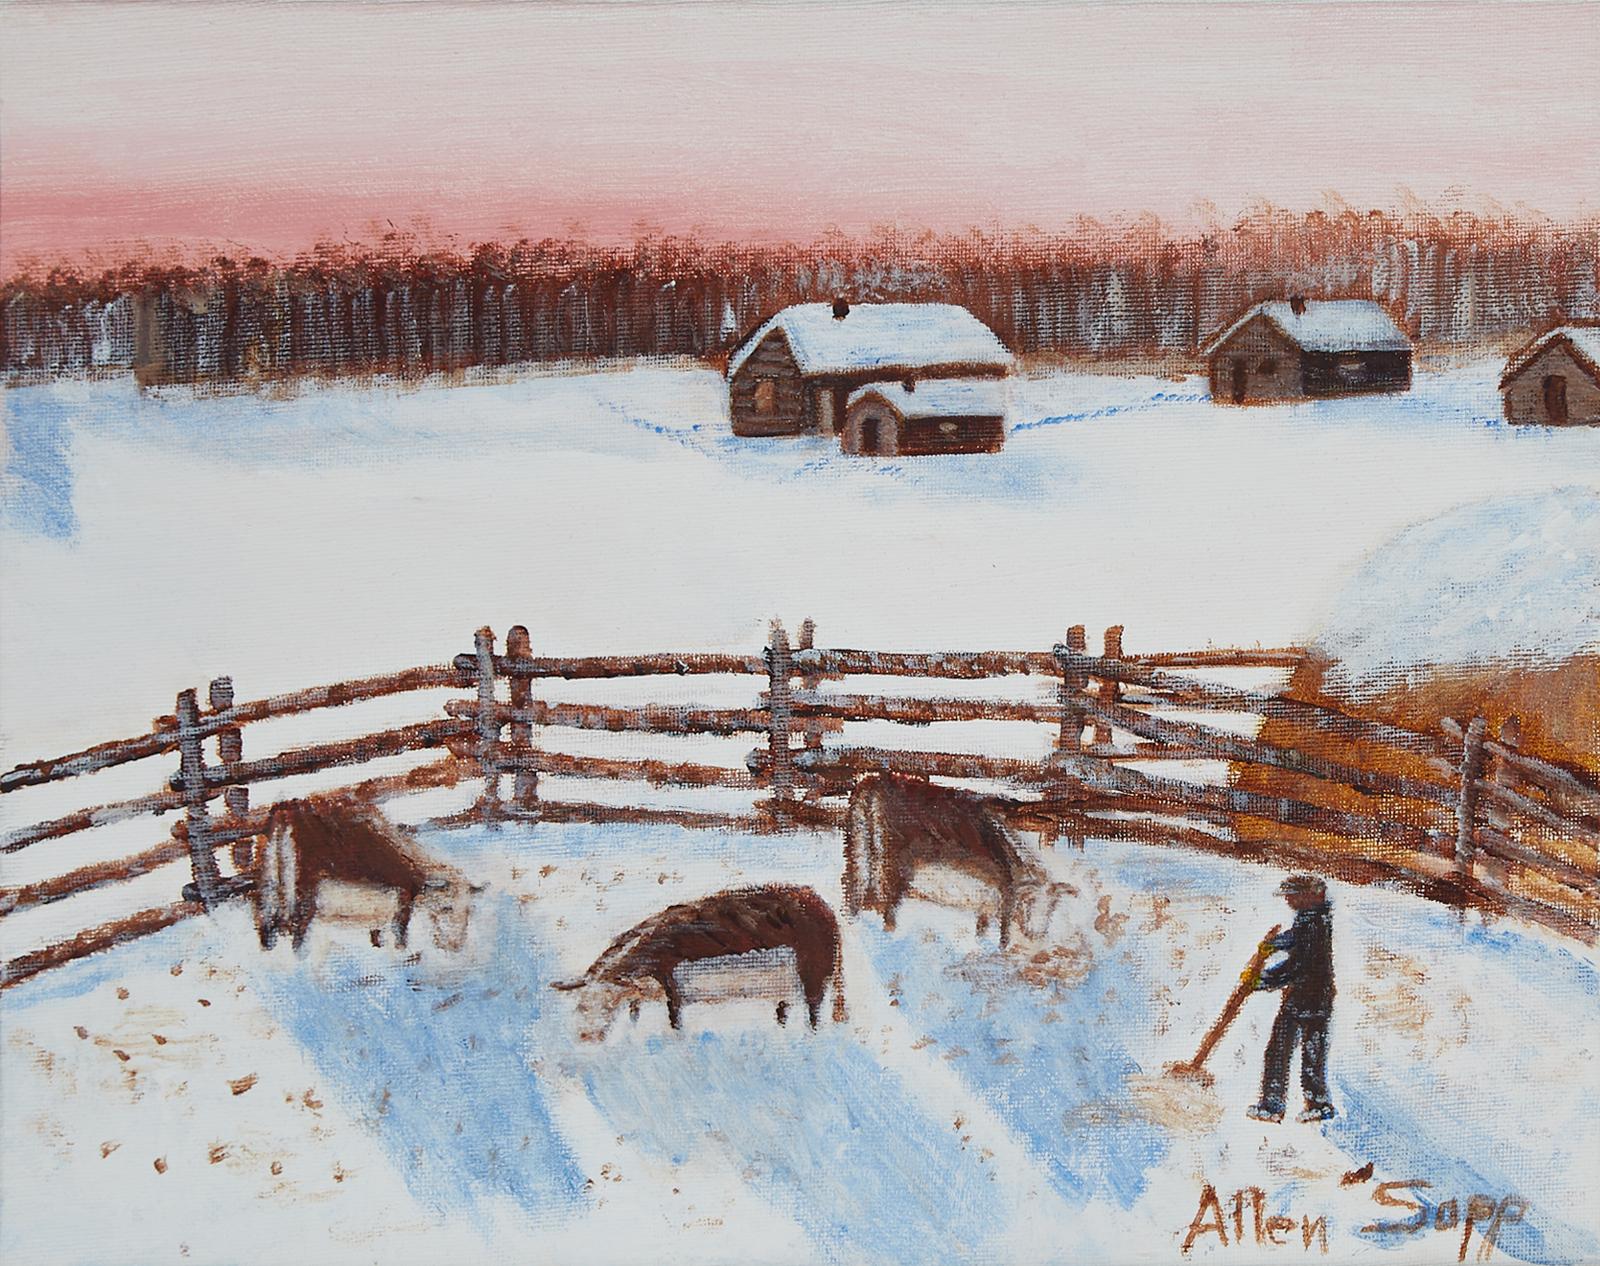 Allen Fredrick Sapp (1929-2015) - Looking After Cows